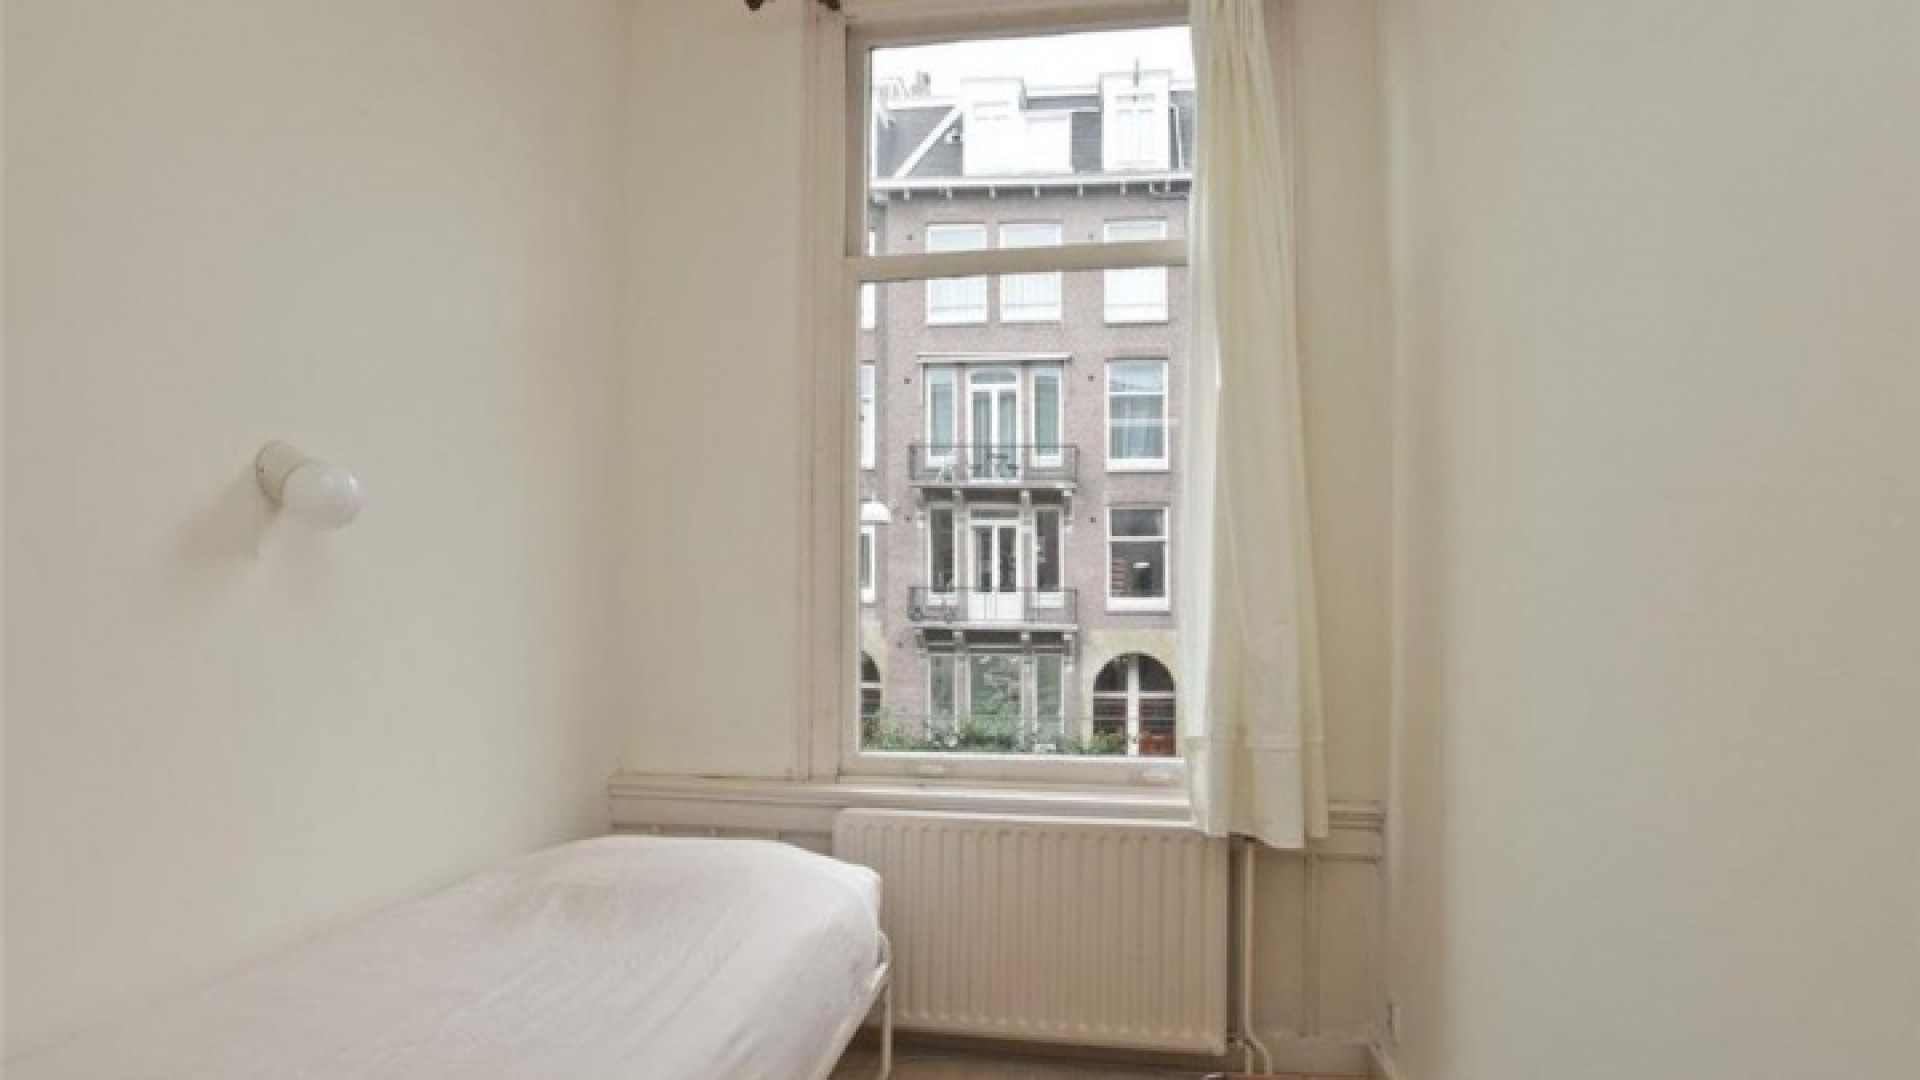 Caro Emerald koopt statig pand in Amsterdam Zuid. Zie foto's 16